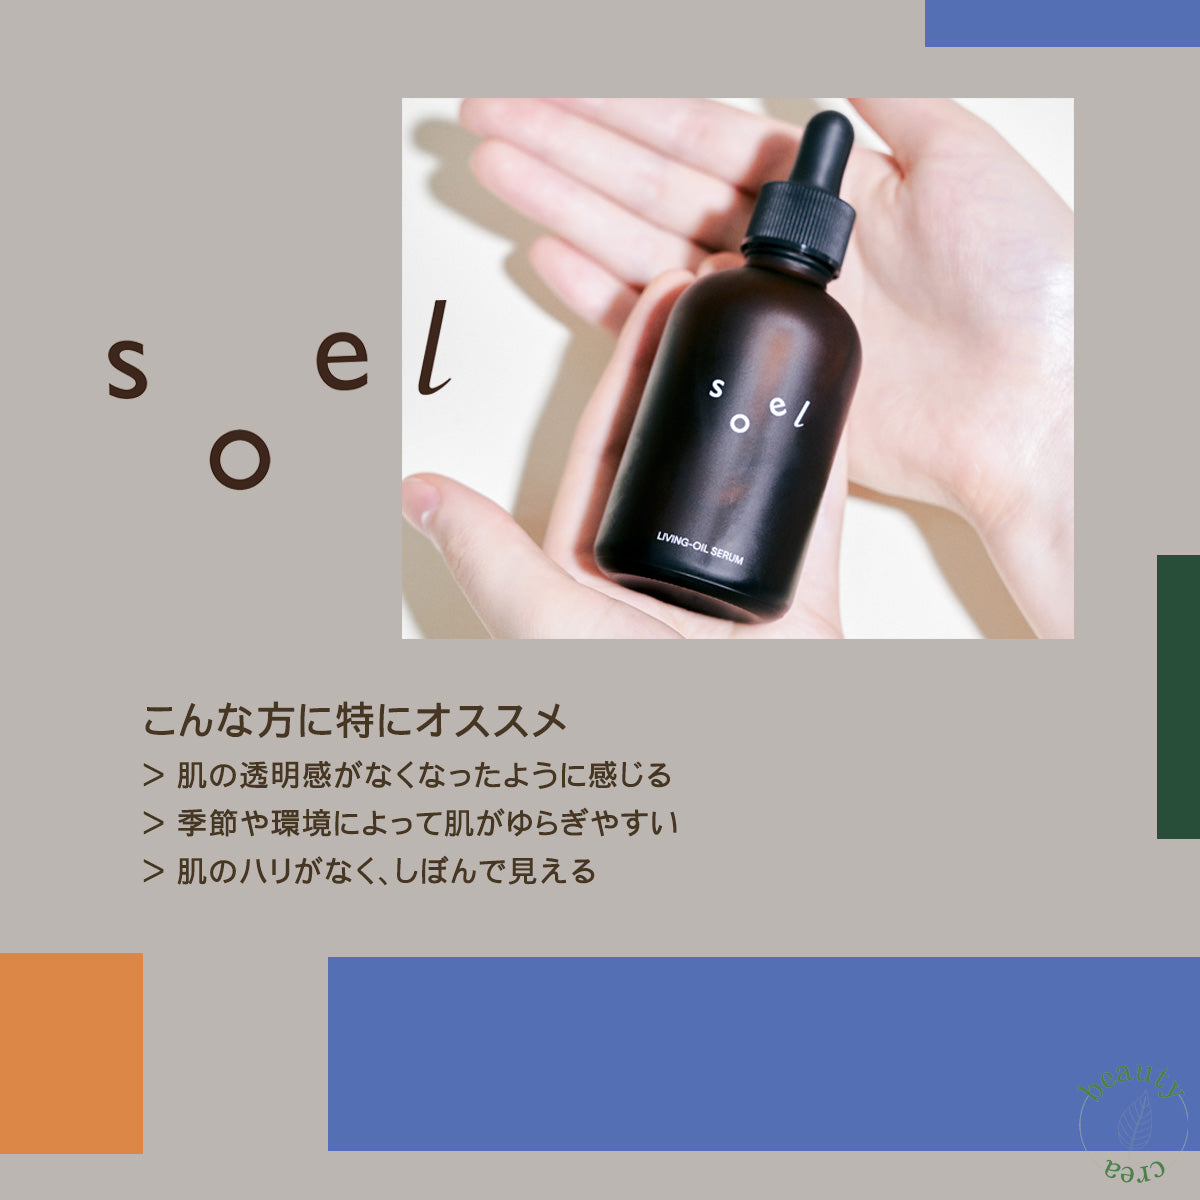 soel LIVING-OIL SERUM 美容液 60ml